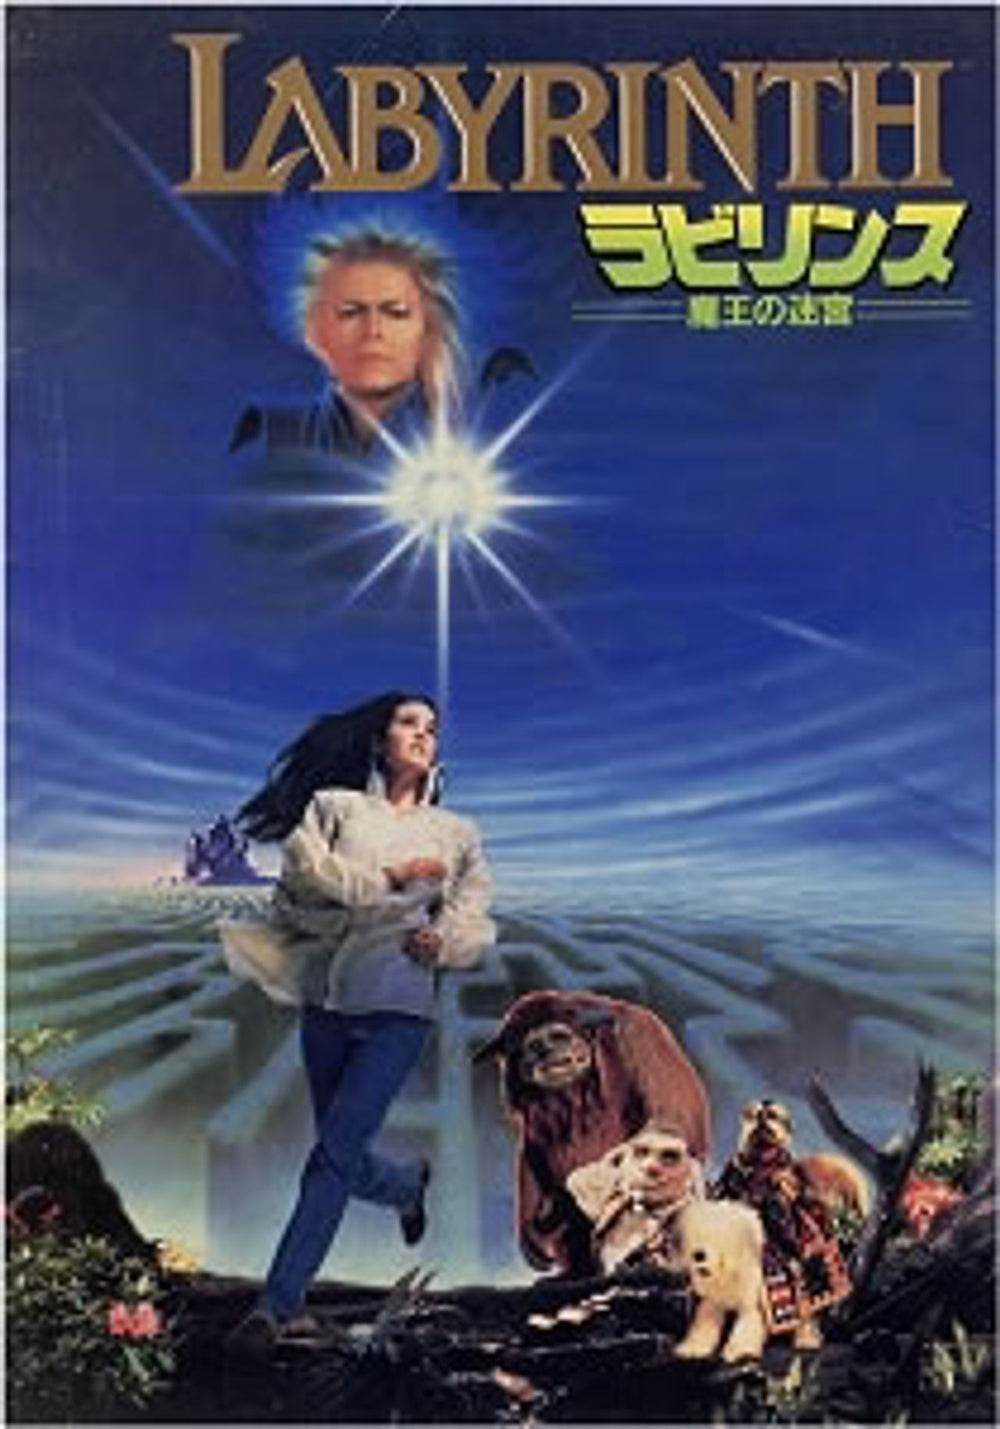 David Bowie Labyrinth - Cinema Programme Japanese press book CINEMA PROGRAMM